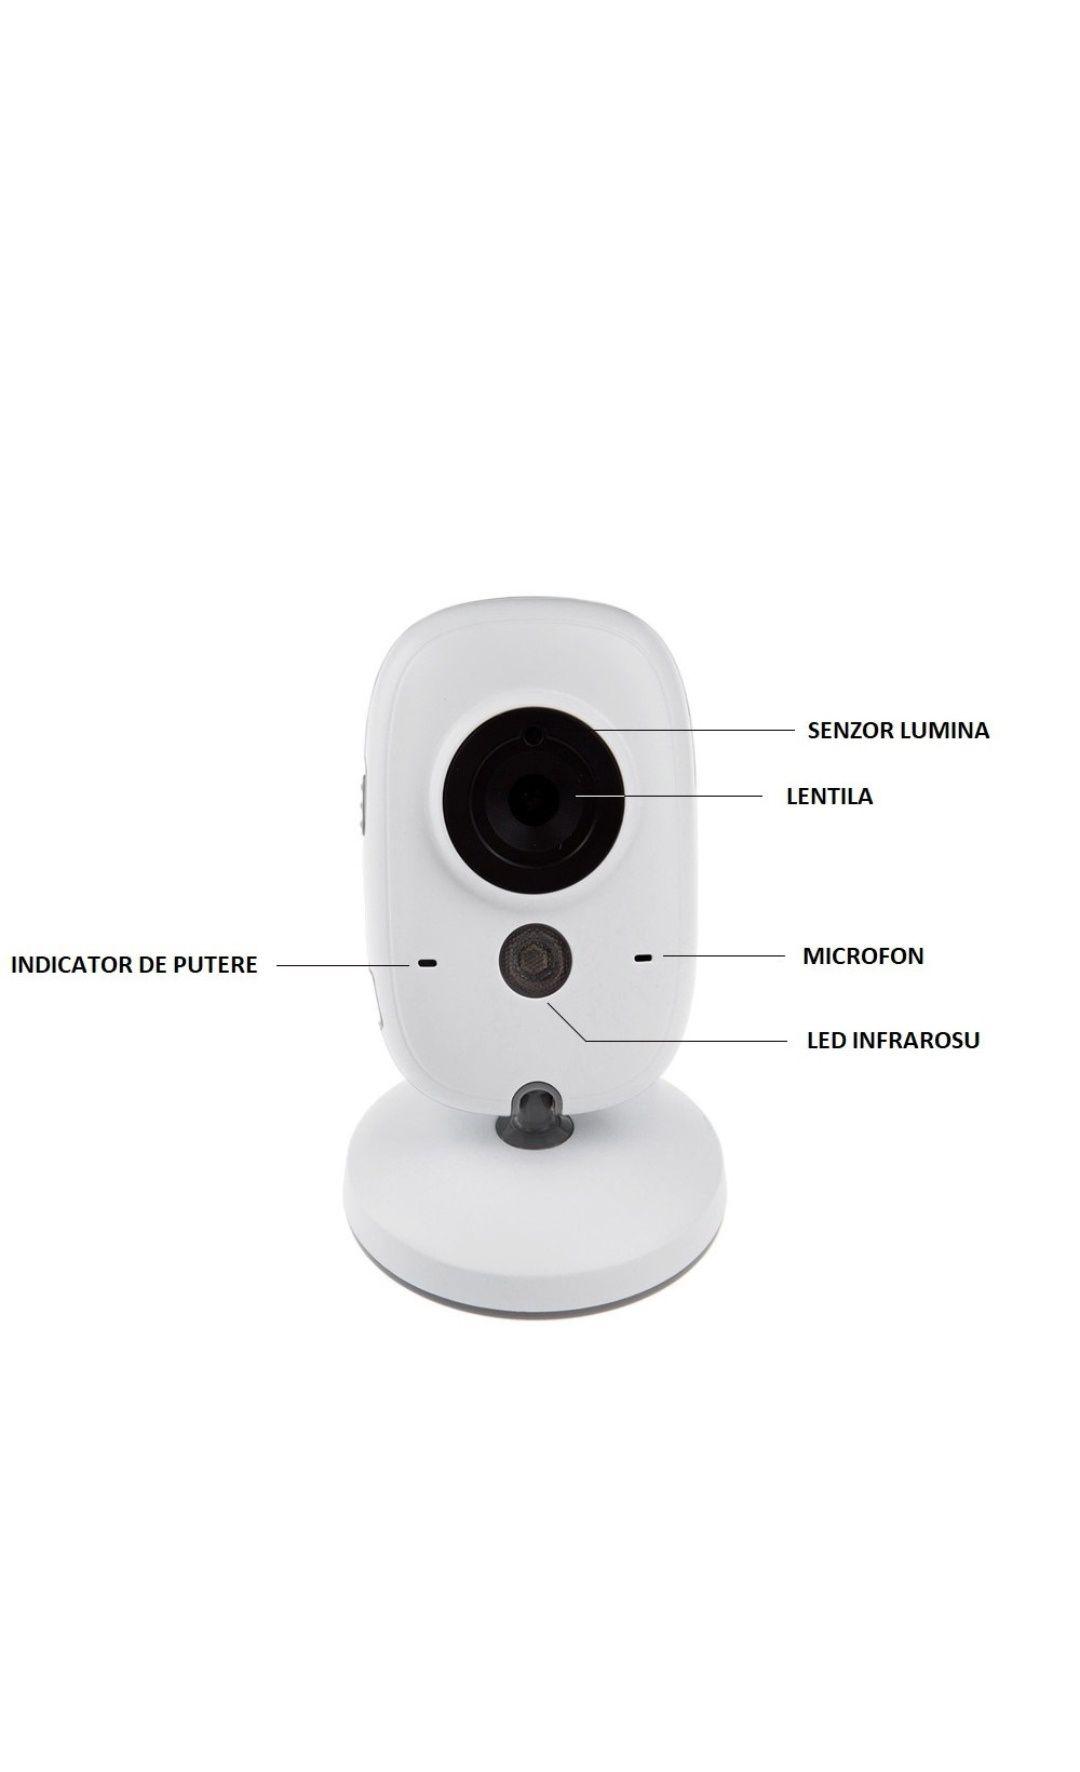 Baby Monitor si Camera Audio-Video Wireless+CADOU suzete